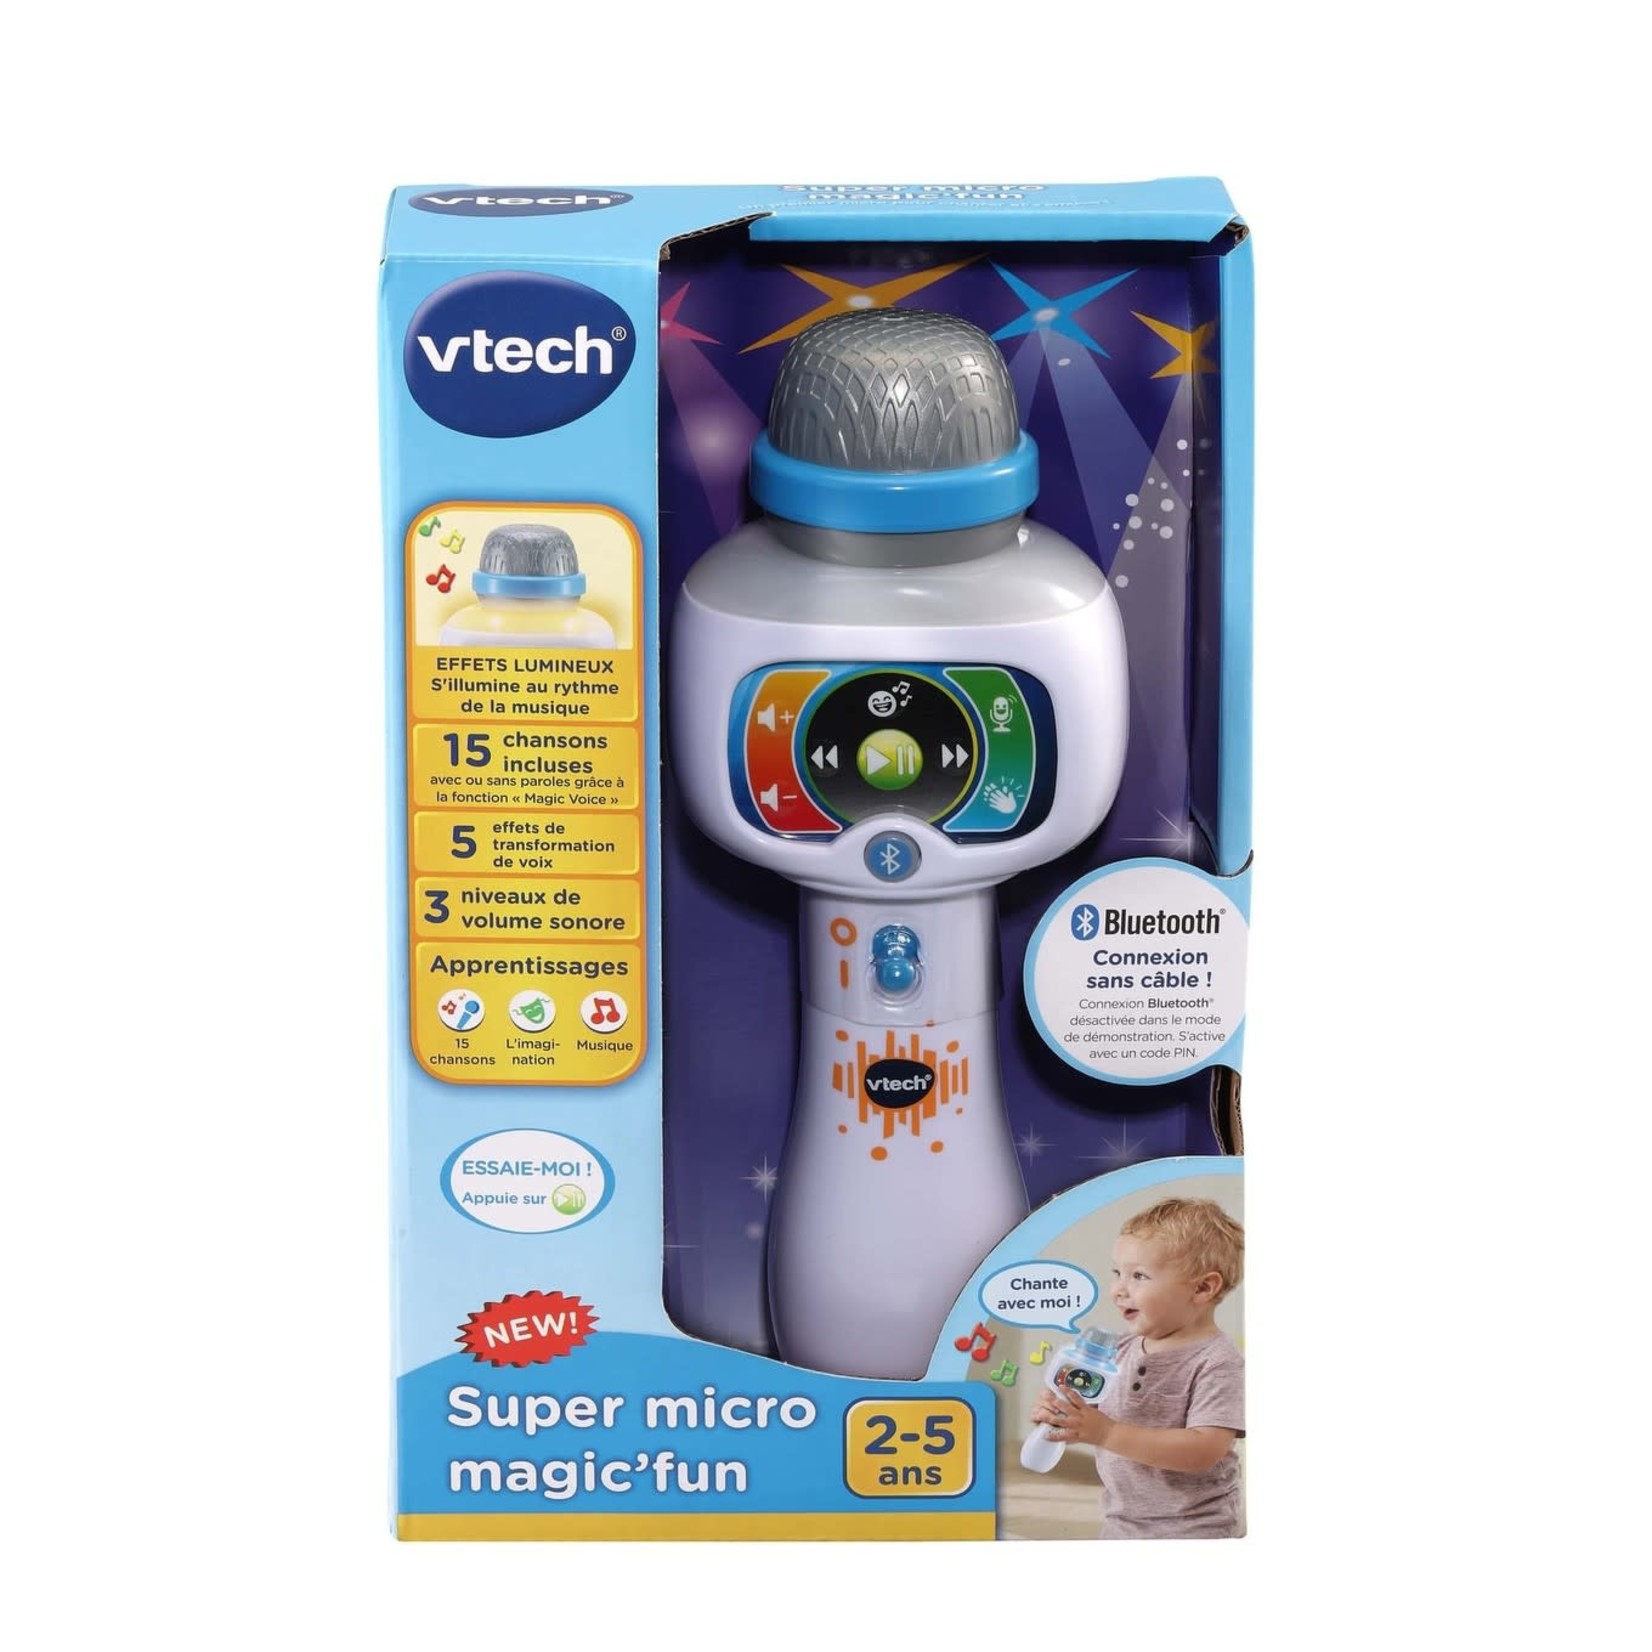 VTech VTech - Super micro magic'fun